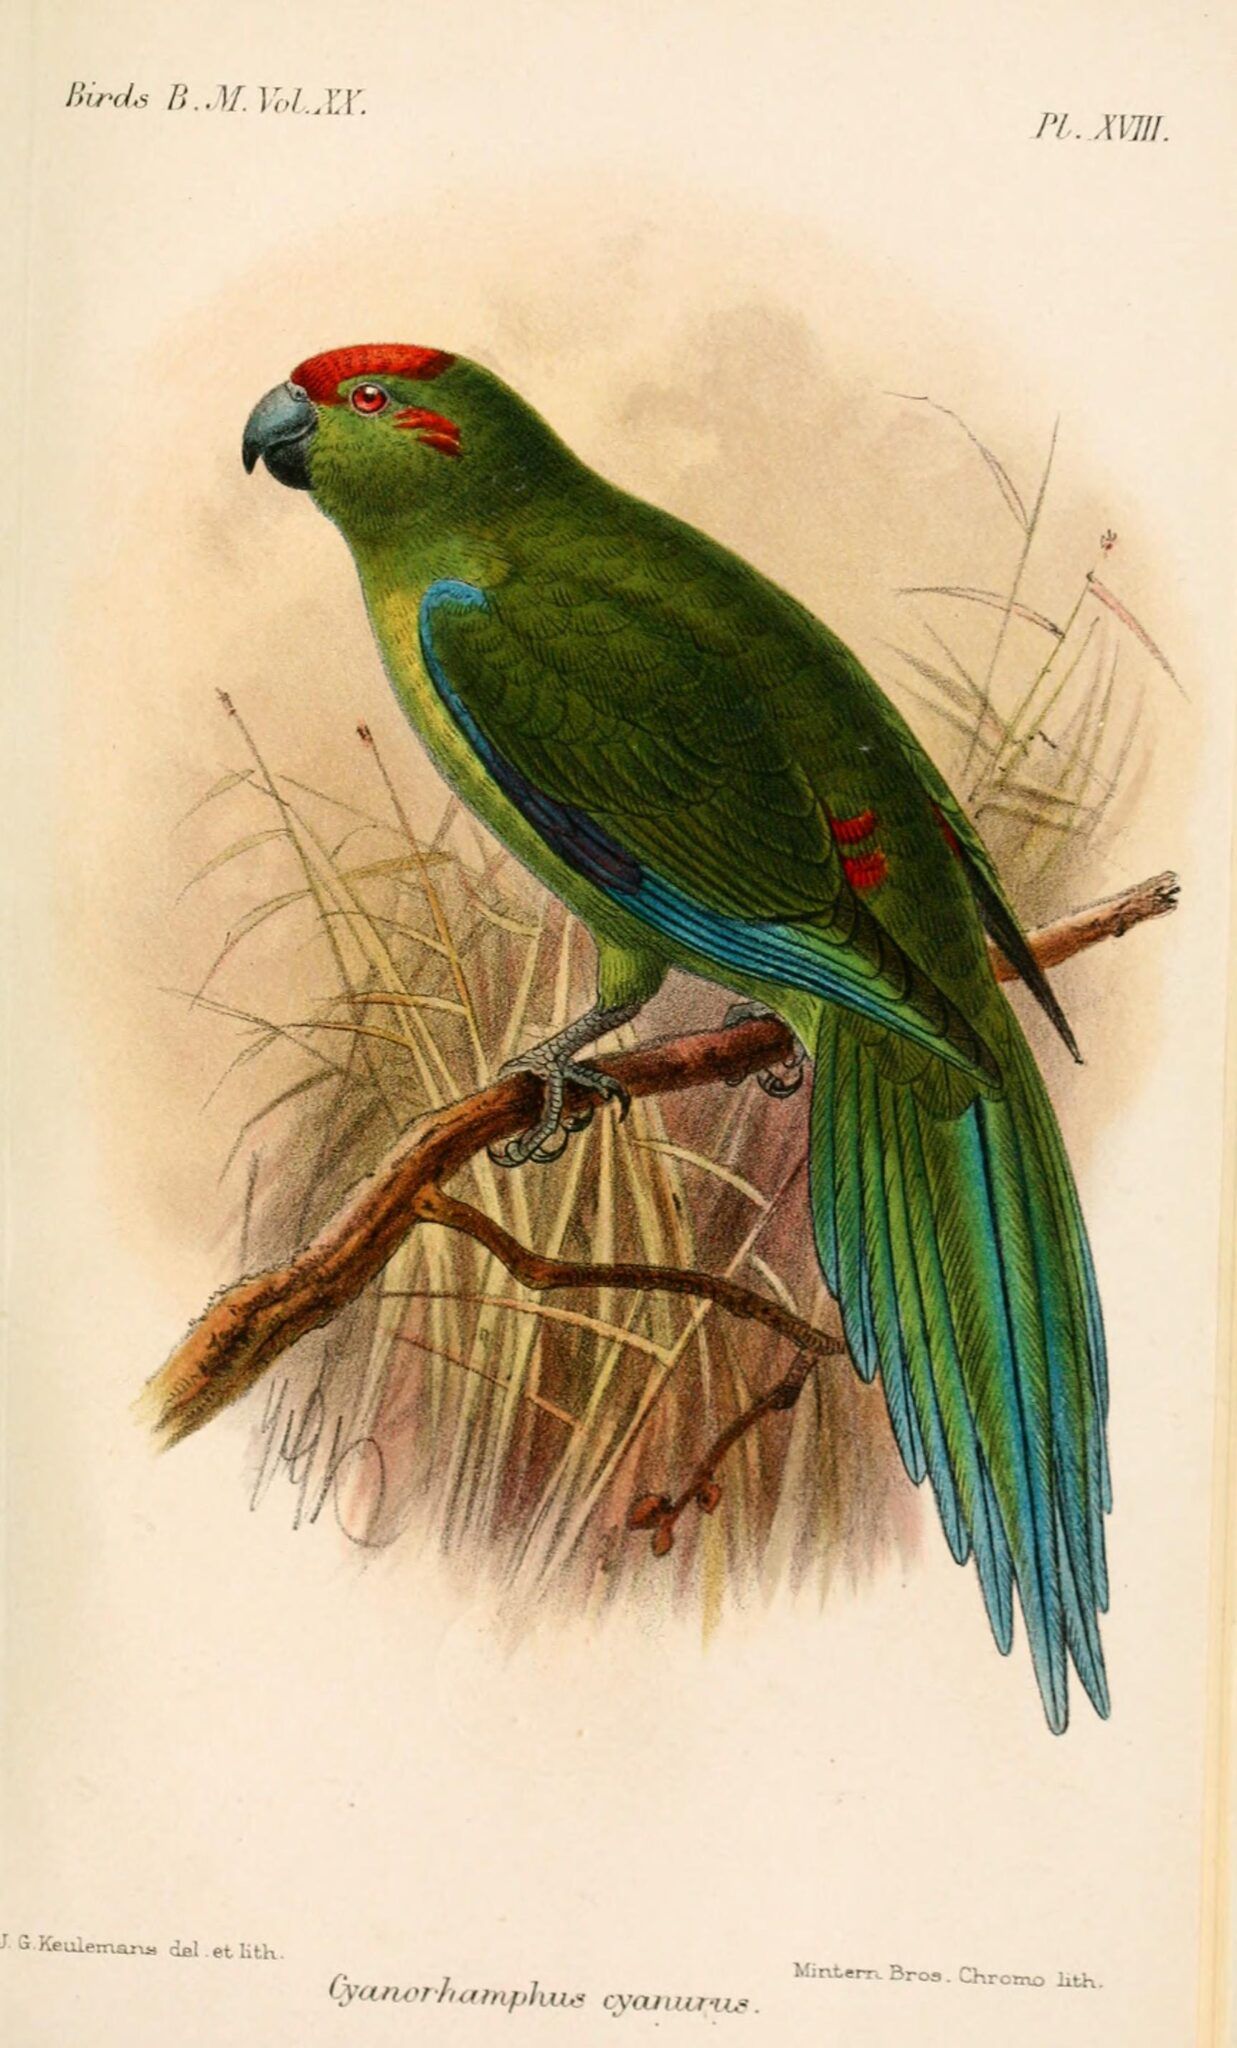 Vintage illustration of kakariki parrot (Cyanoramphus)